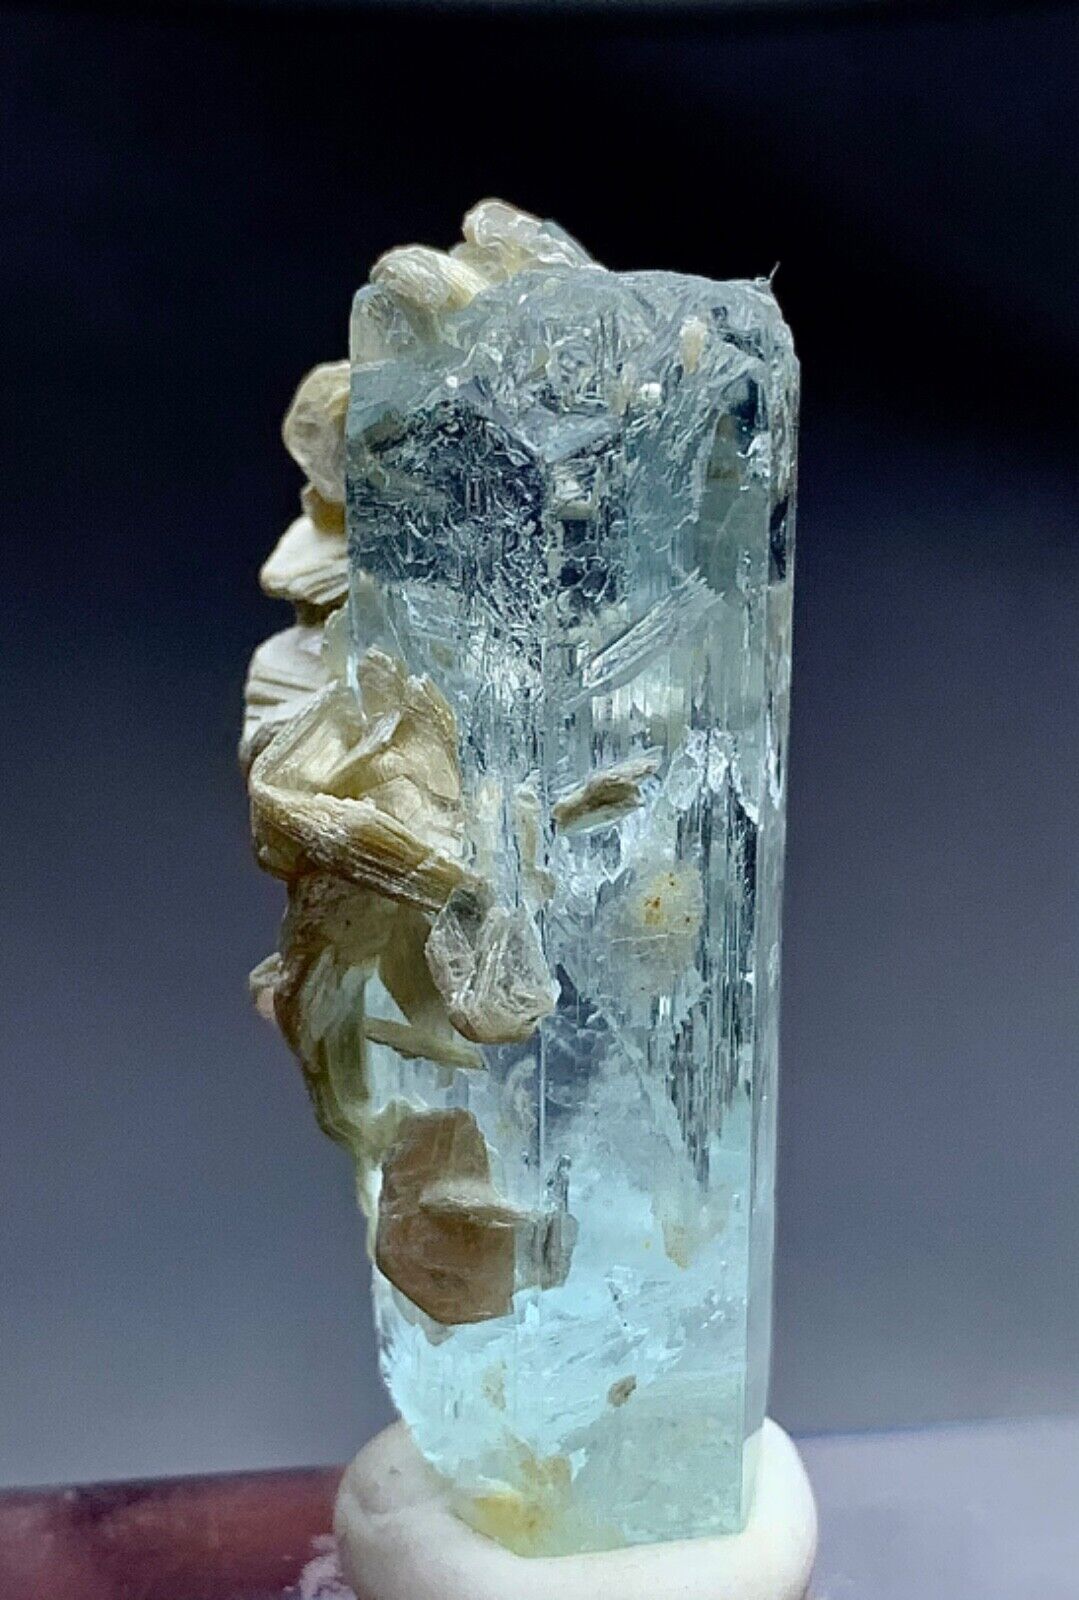 49 Carat Stunning Aquamarine Crystal with Mica from Pakistan